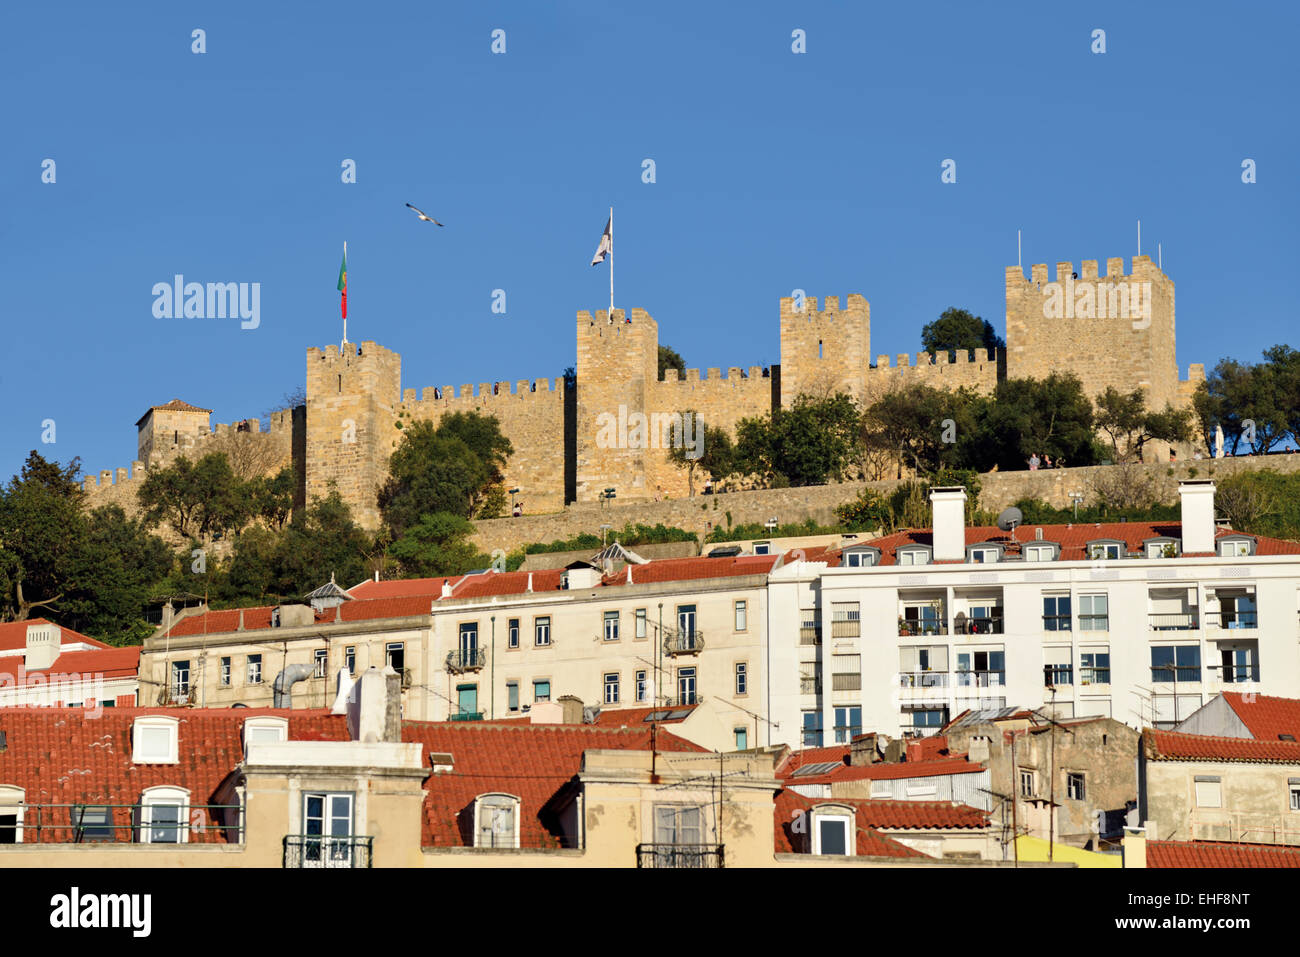 Portugal, Lisbon: View of the medieval castle Castelo de Sao Jorge Stock Photo